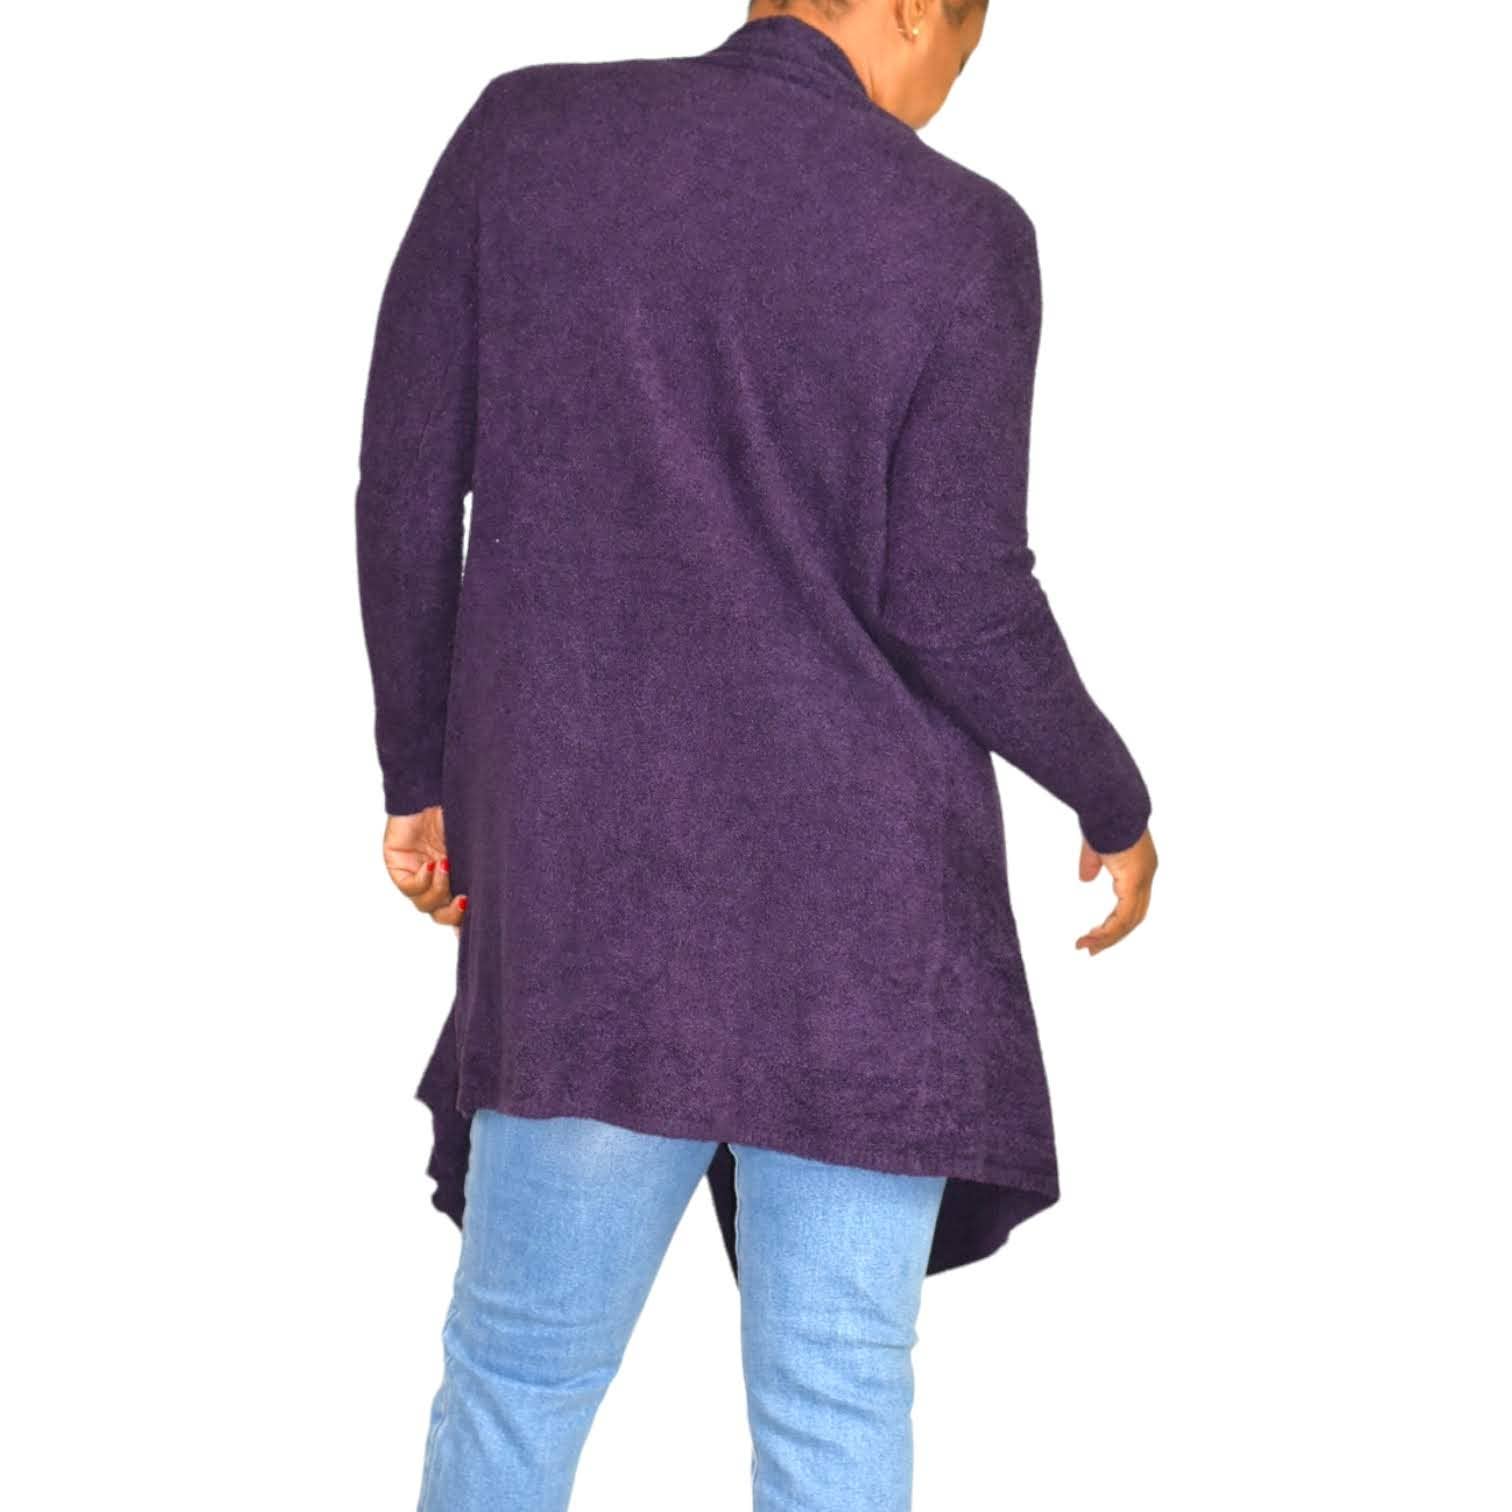 Barefoot Dreams Calypso Wrap Bamboo Chic Lite Purple Amethyst Sweater Size Small